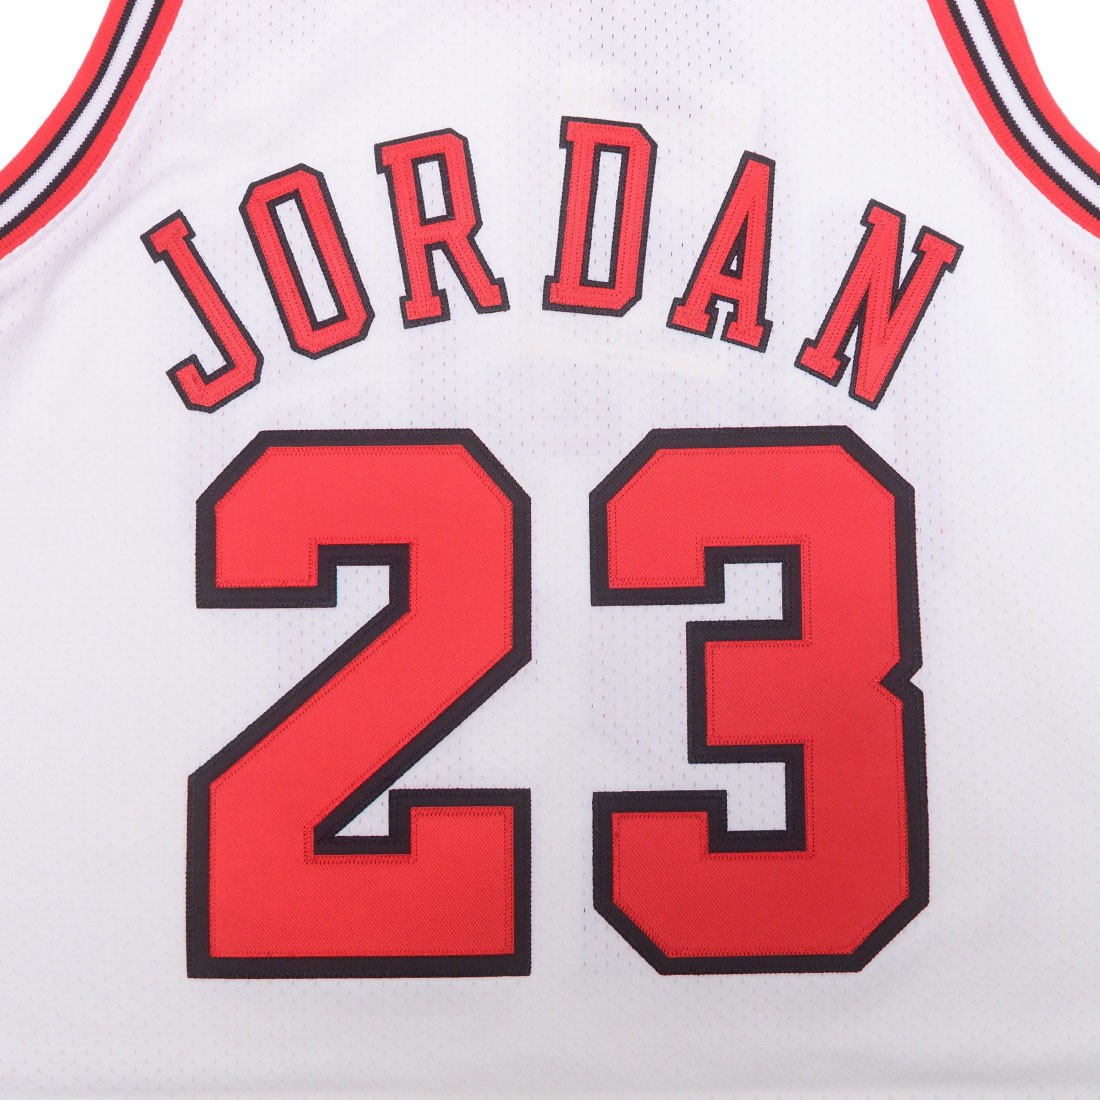 Mitchell And Ness x NBA Men Chicago Bulls Michael Jordan Jersey - Road 97  (black)